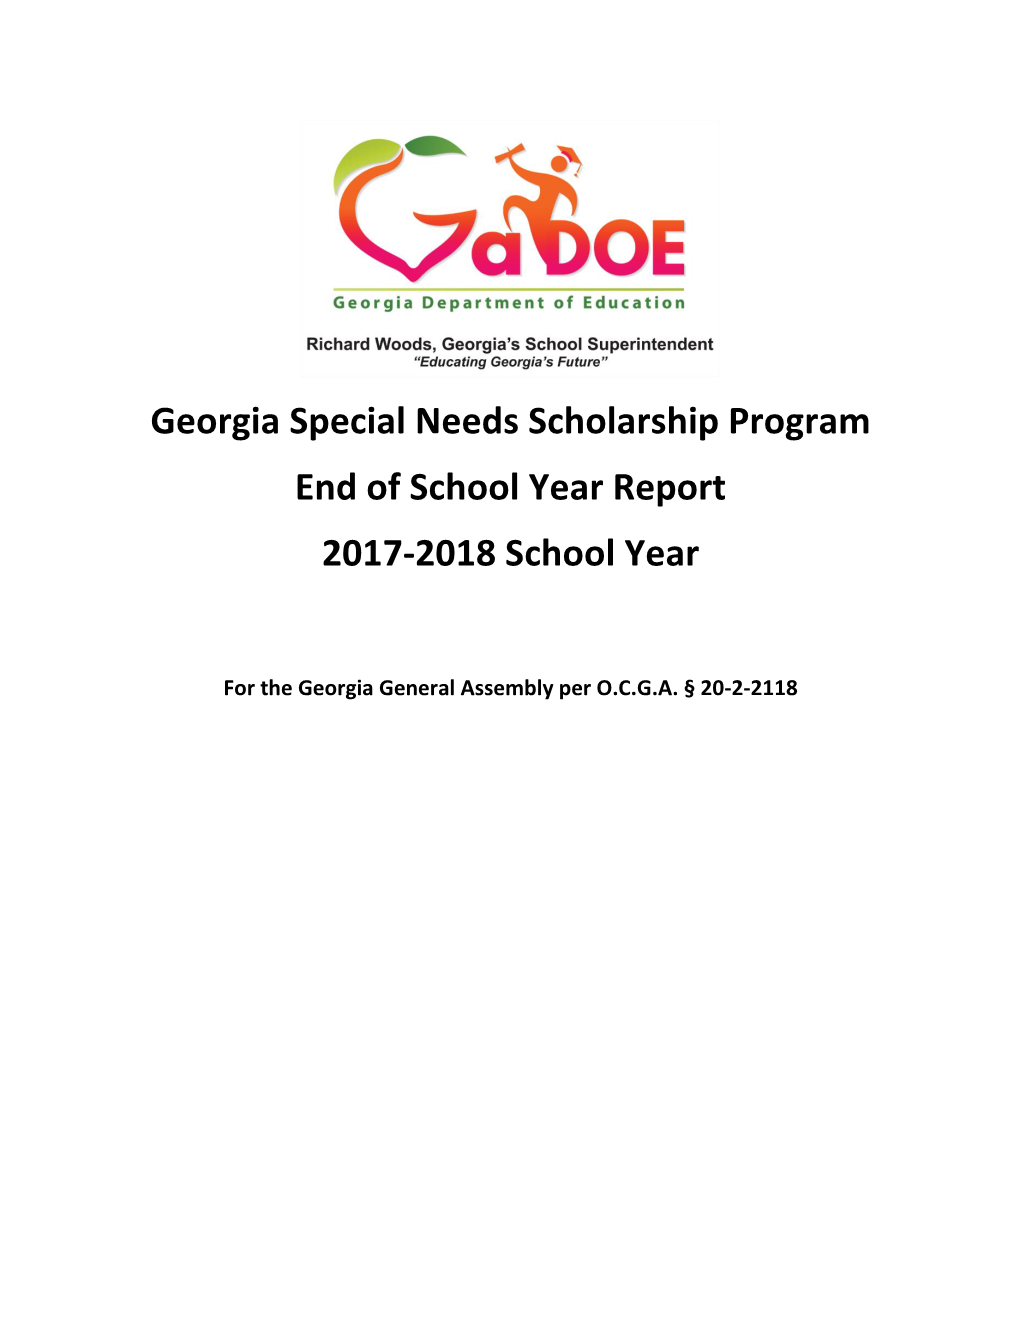 Georgia Special Needs Scholarship Program End of School Year Report 2017-2018 School Year